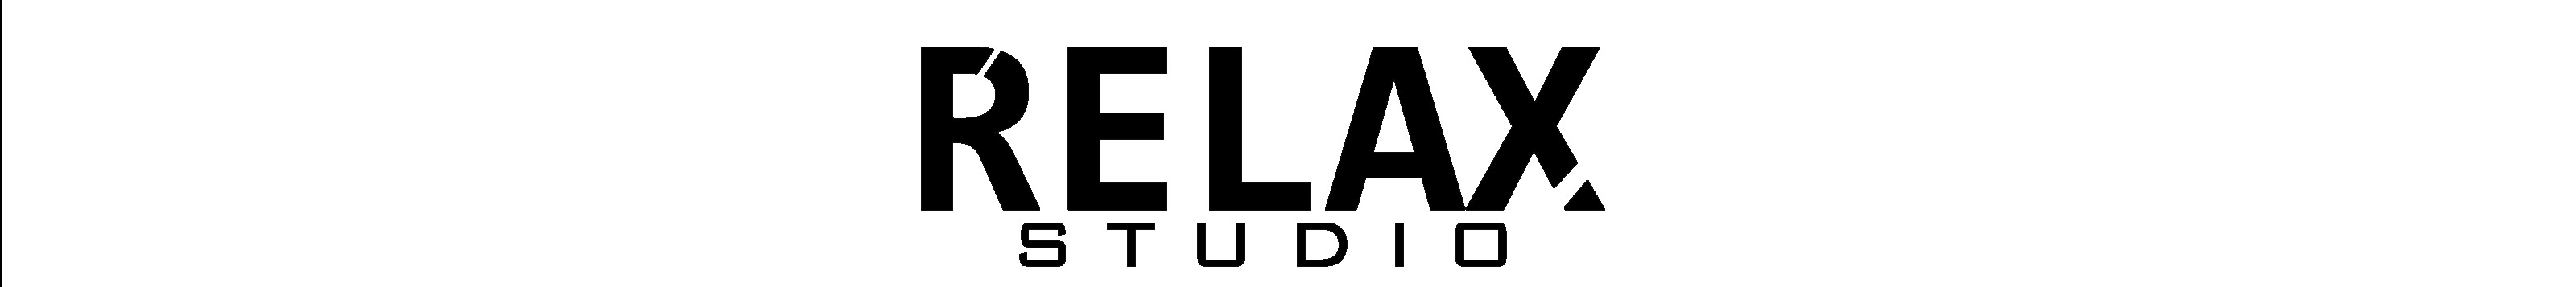 Relax Studio's profile banner